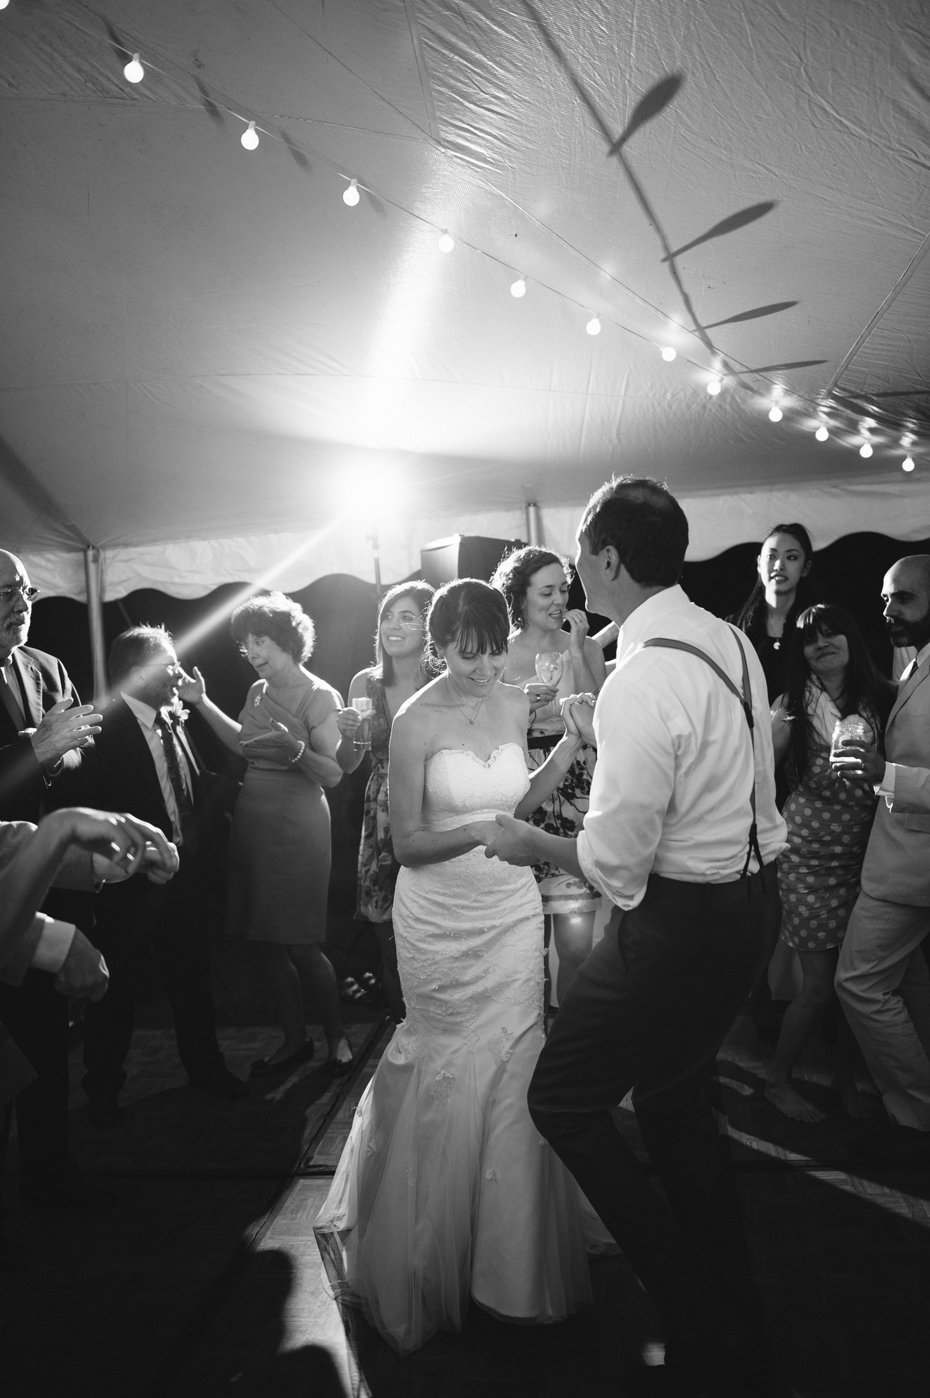 Bride and groom dancing at a backyard wedding by Bloomfield Hills wedding photographer Heather Jowett.